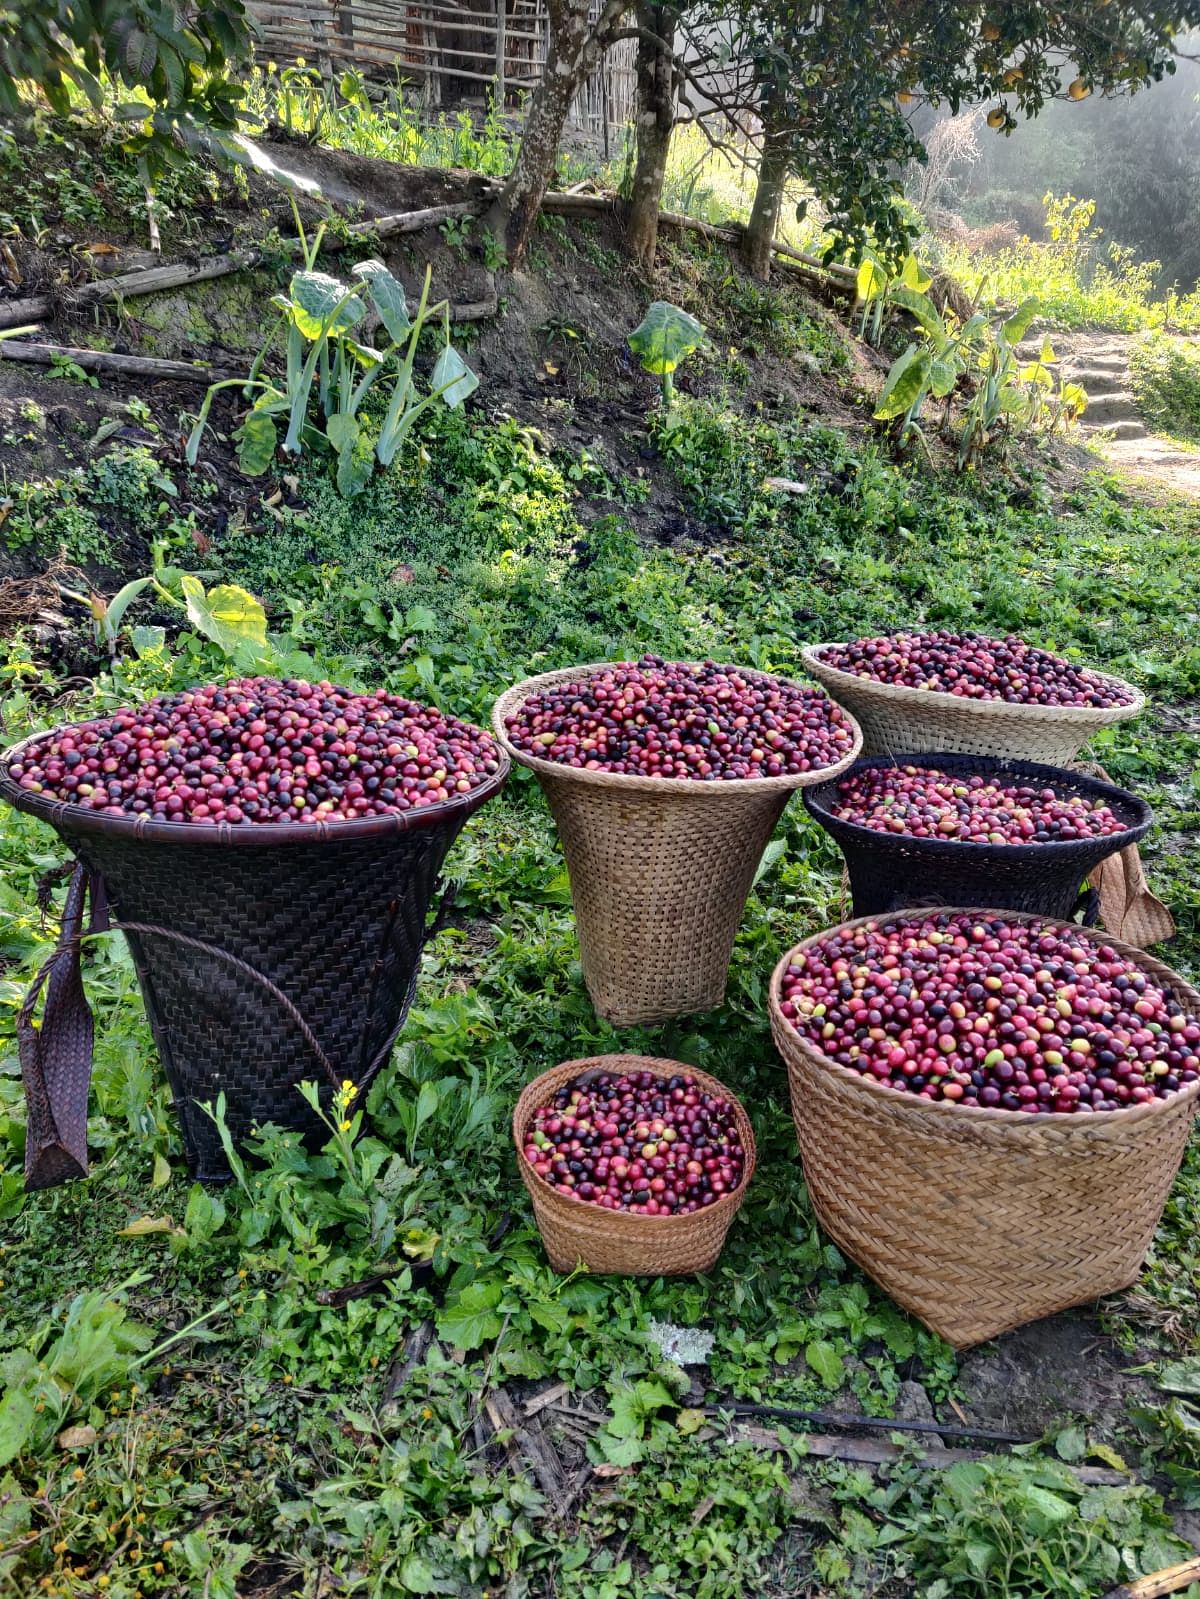 Coffee beans of Nagaland. Credit: Nagaland Government